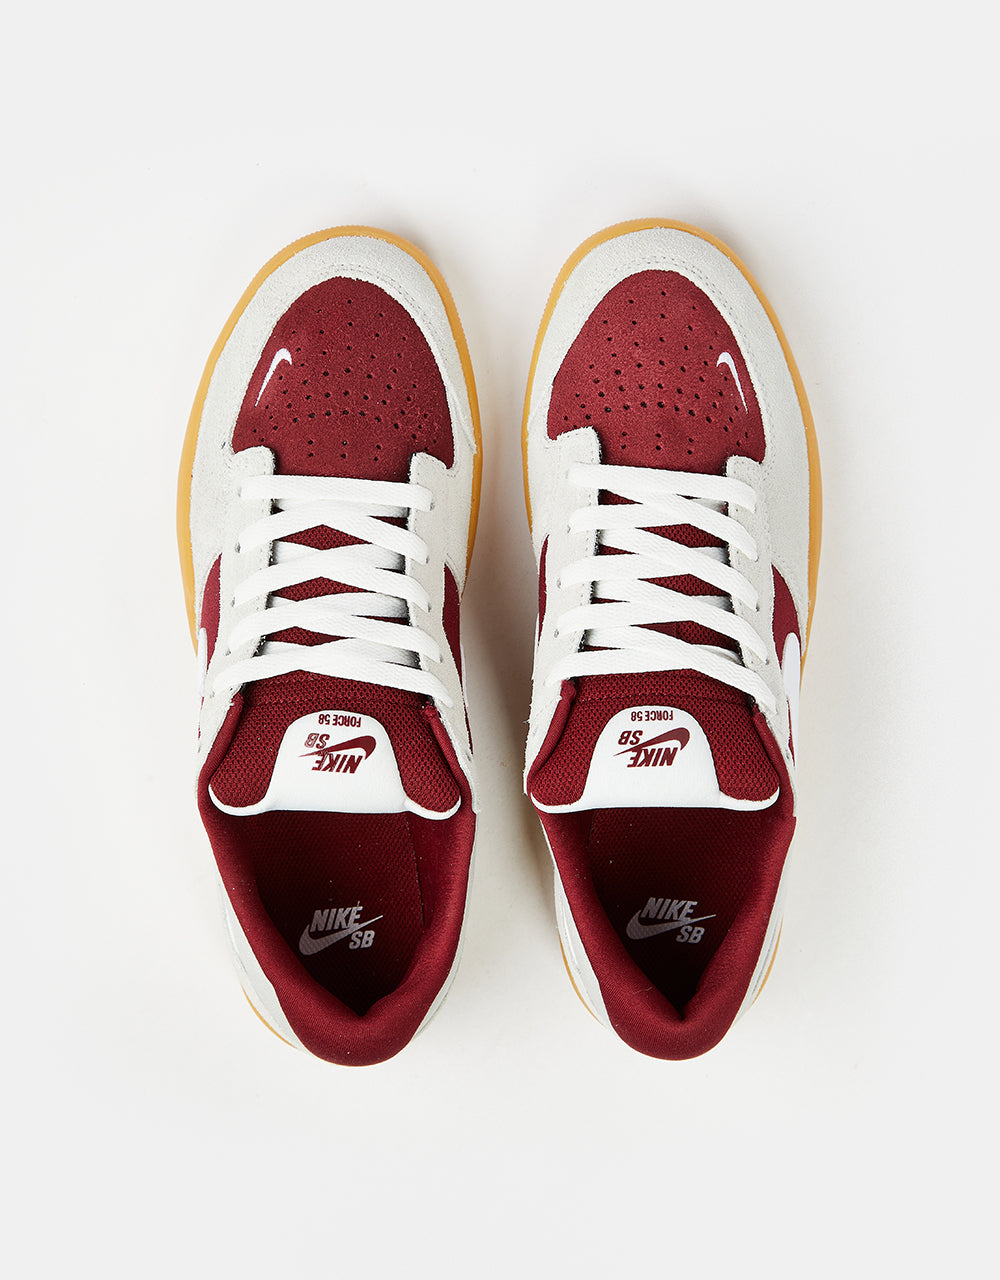 Nike SB Force 58 Skate Shoes - Team Red/White-Summit White-Gum Lt Brown